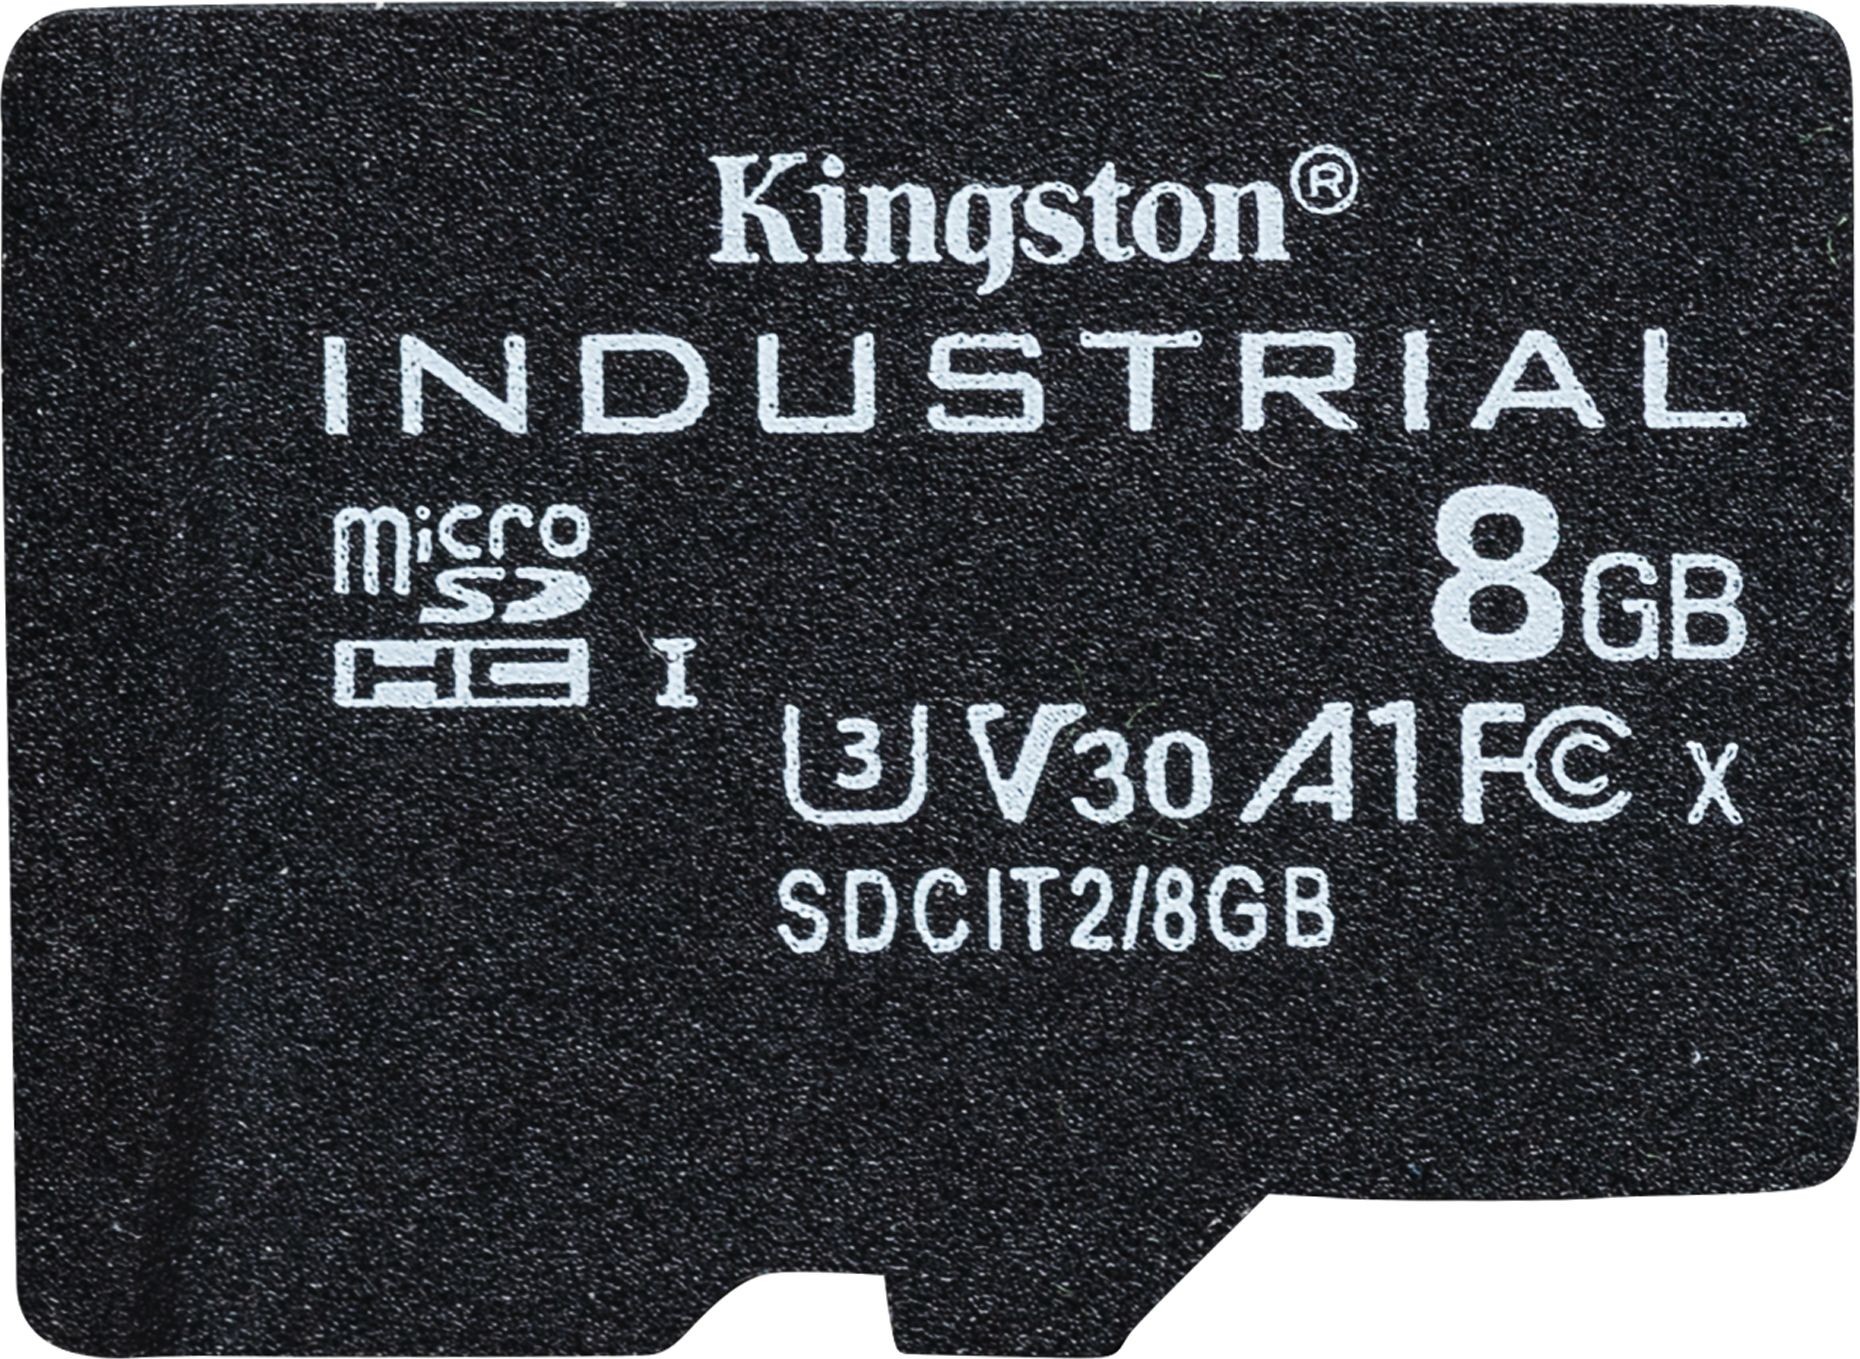 Kingston Industrial MicroSDHC 8GB UHS-I/U3 A1 V30 SDCIT2/8GB SDCIT2/8GB